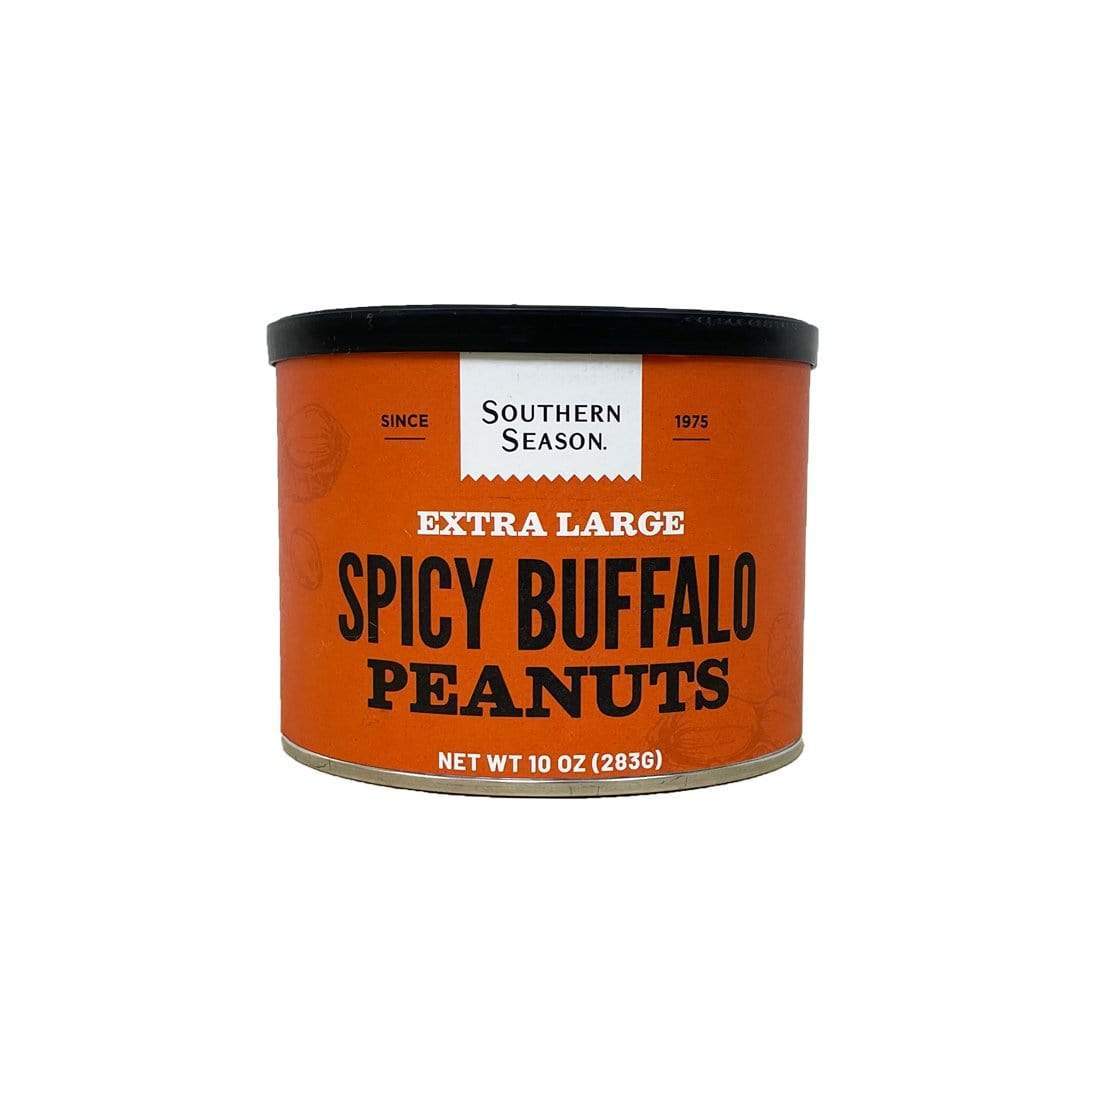 Southern Season Southern Season Spicy Buffalo Peanuts 10 oz